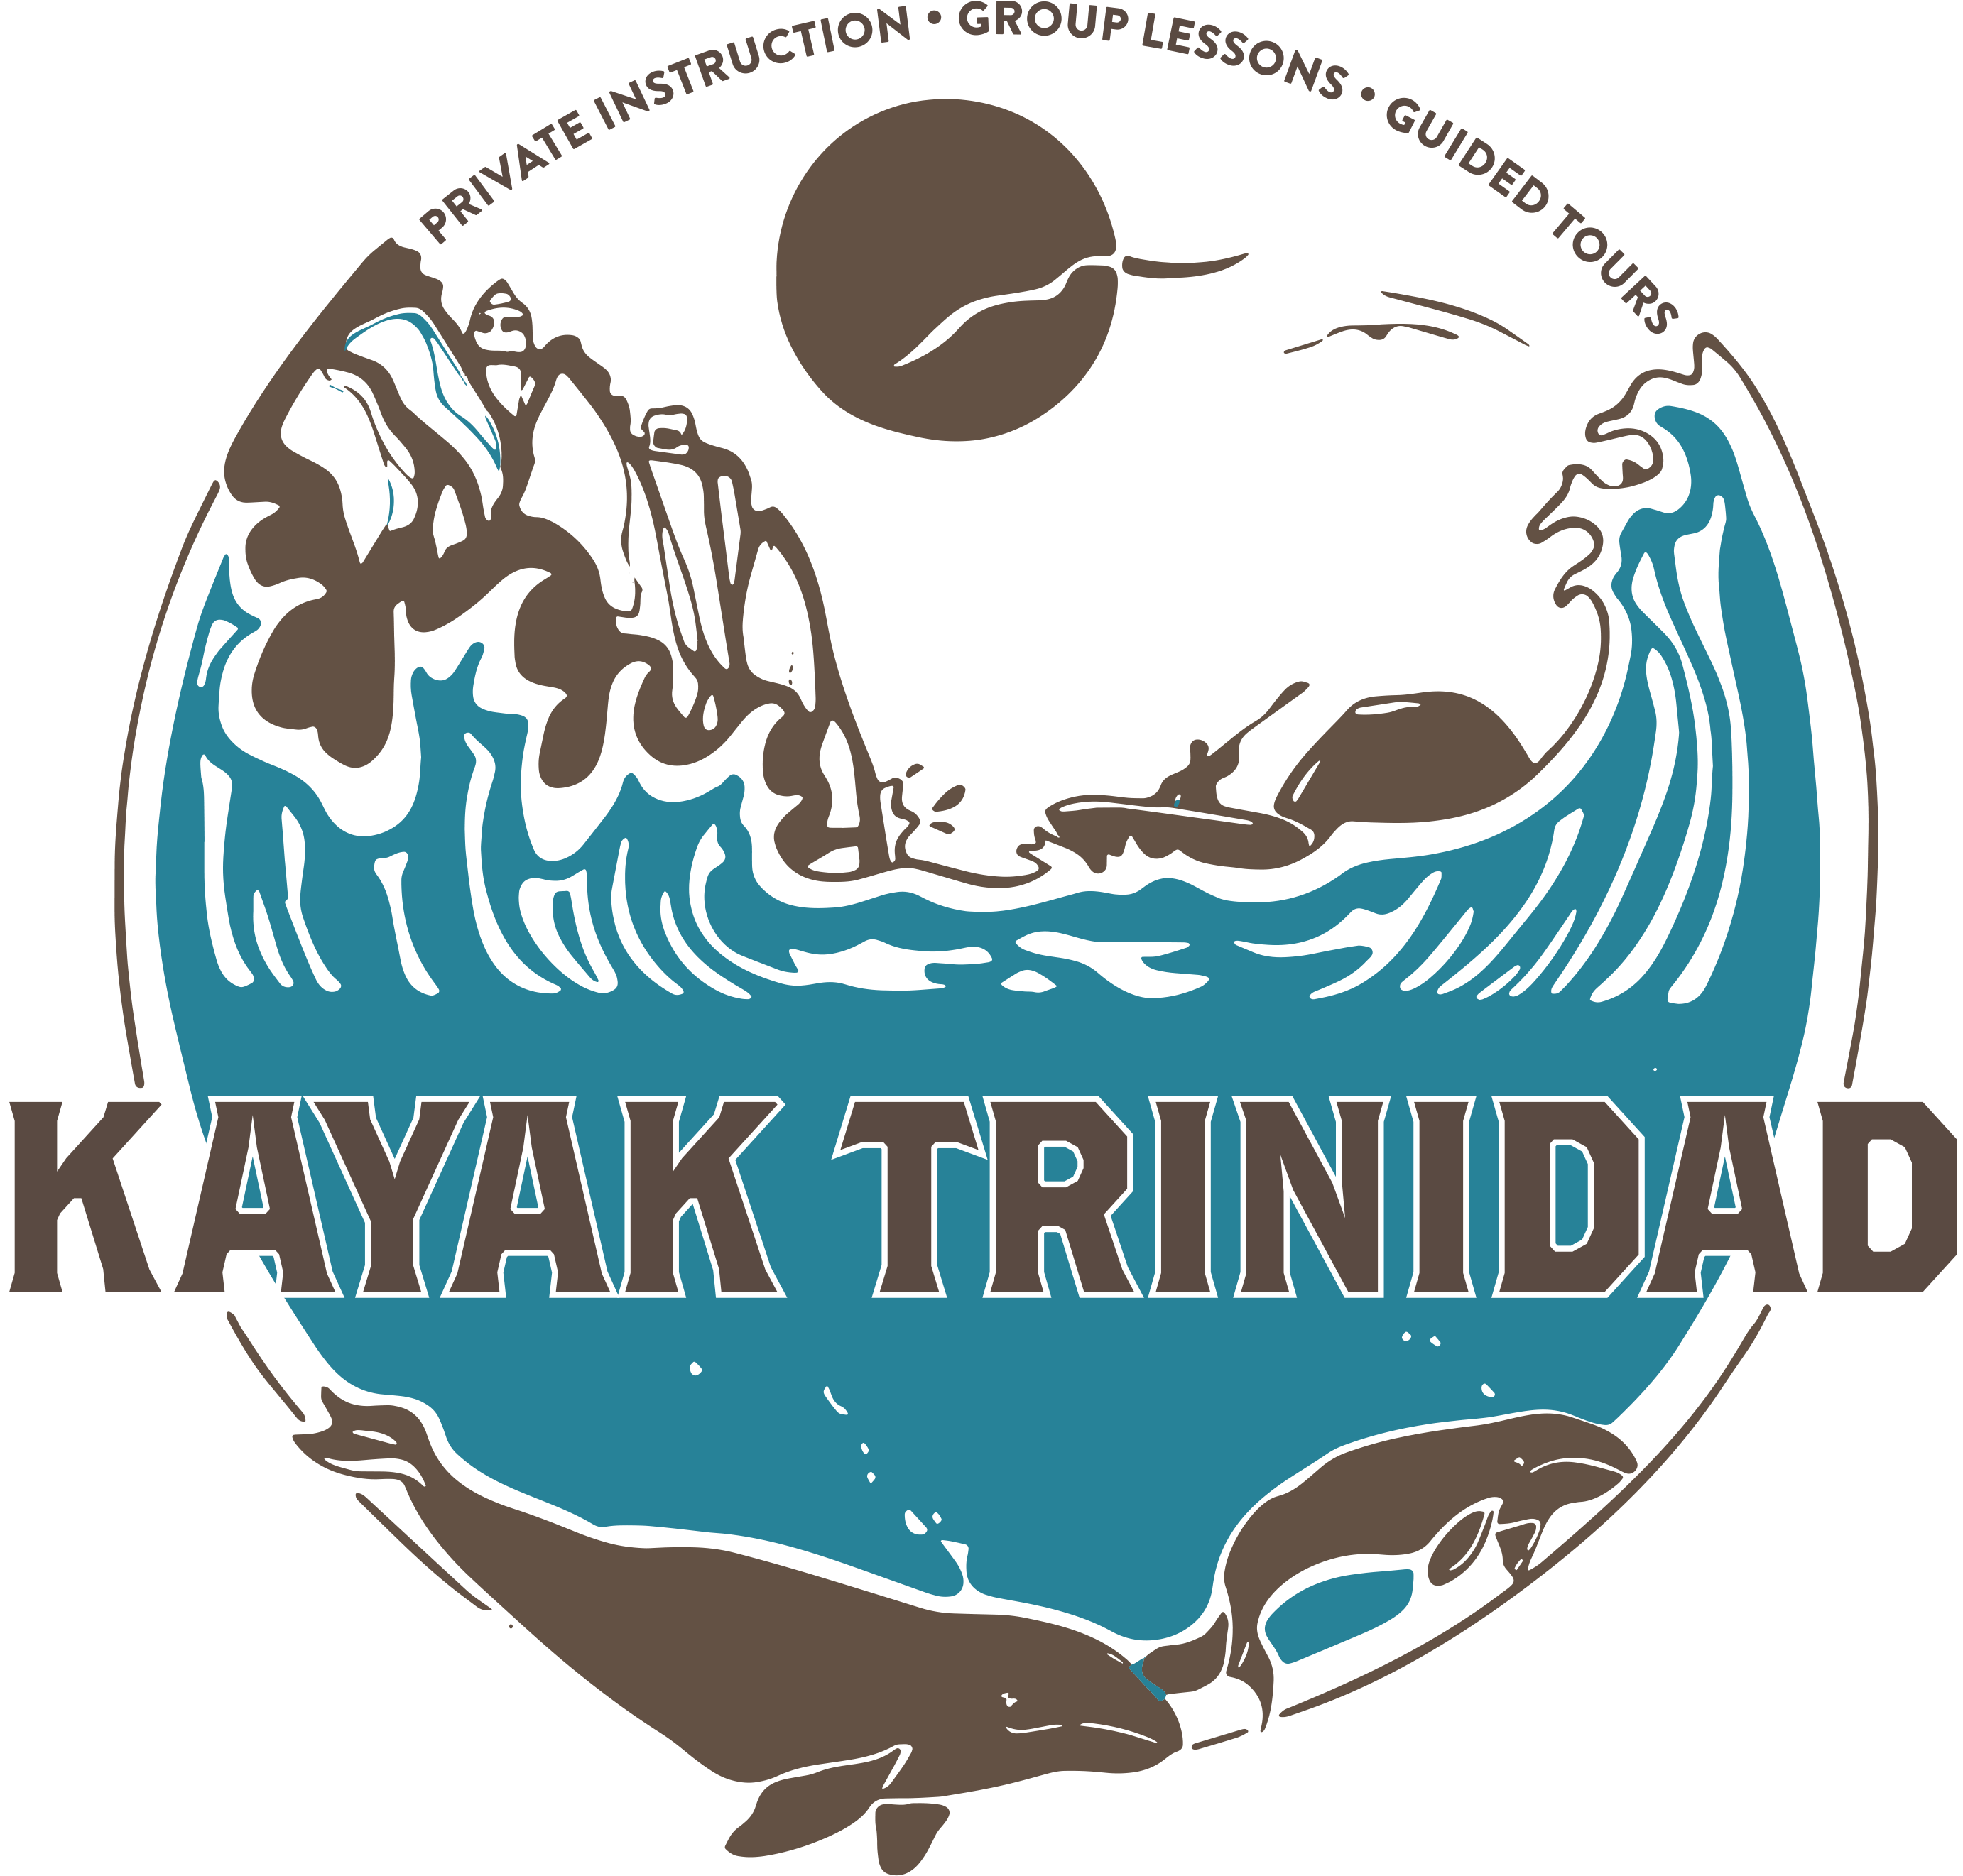 About - Kayak Trinidad (2777x2642)